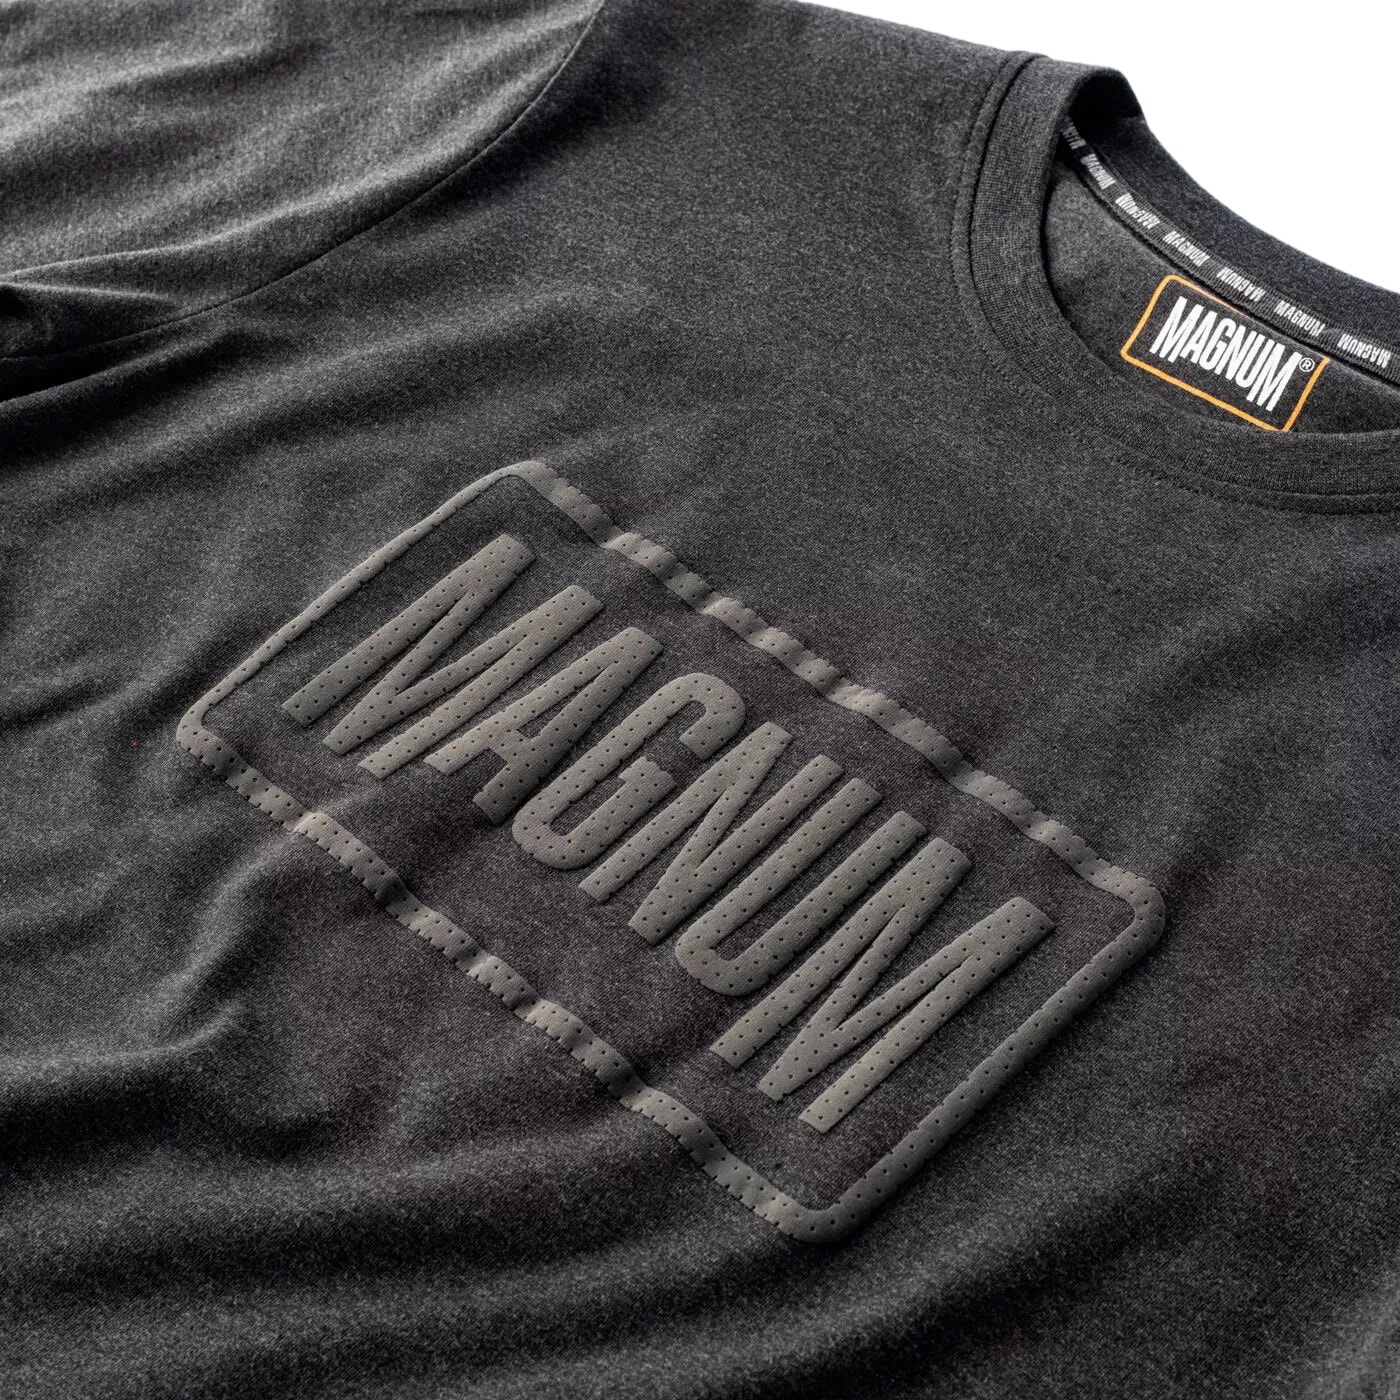 Koszulka T-shirt Magnum Essential 2.0 - Black Melange